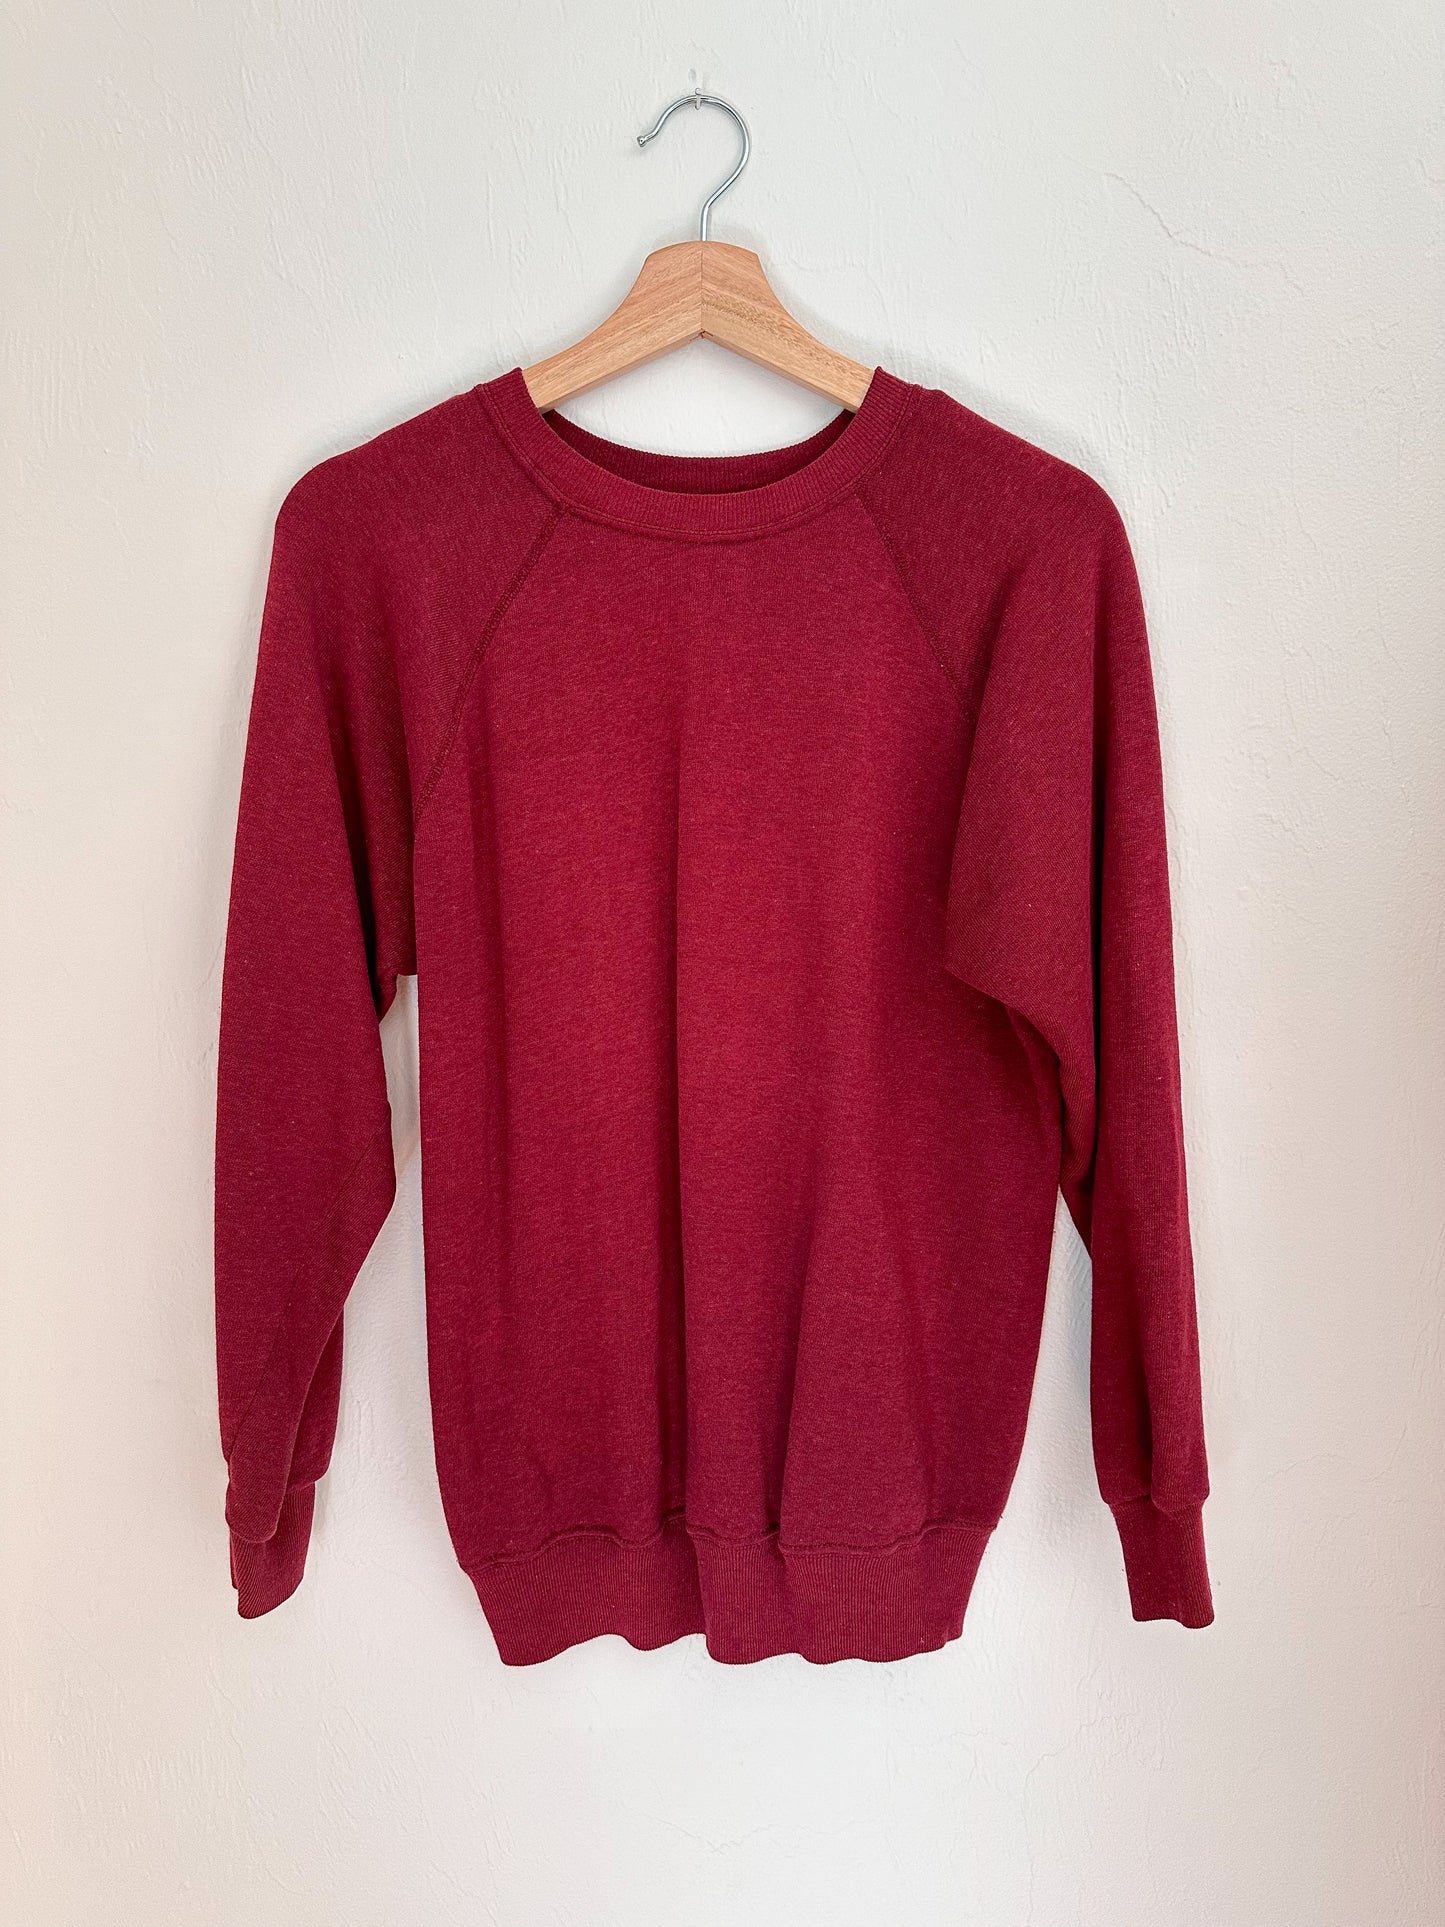 maroon raglan crewneck sweater